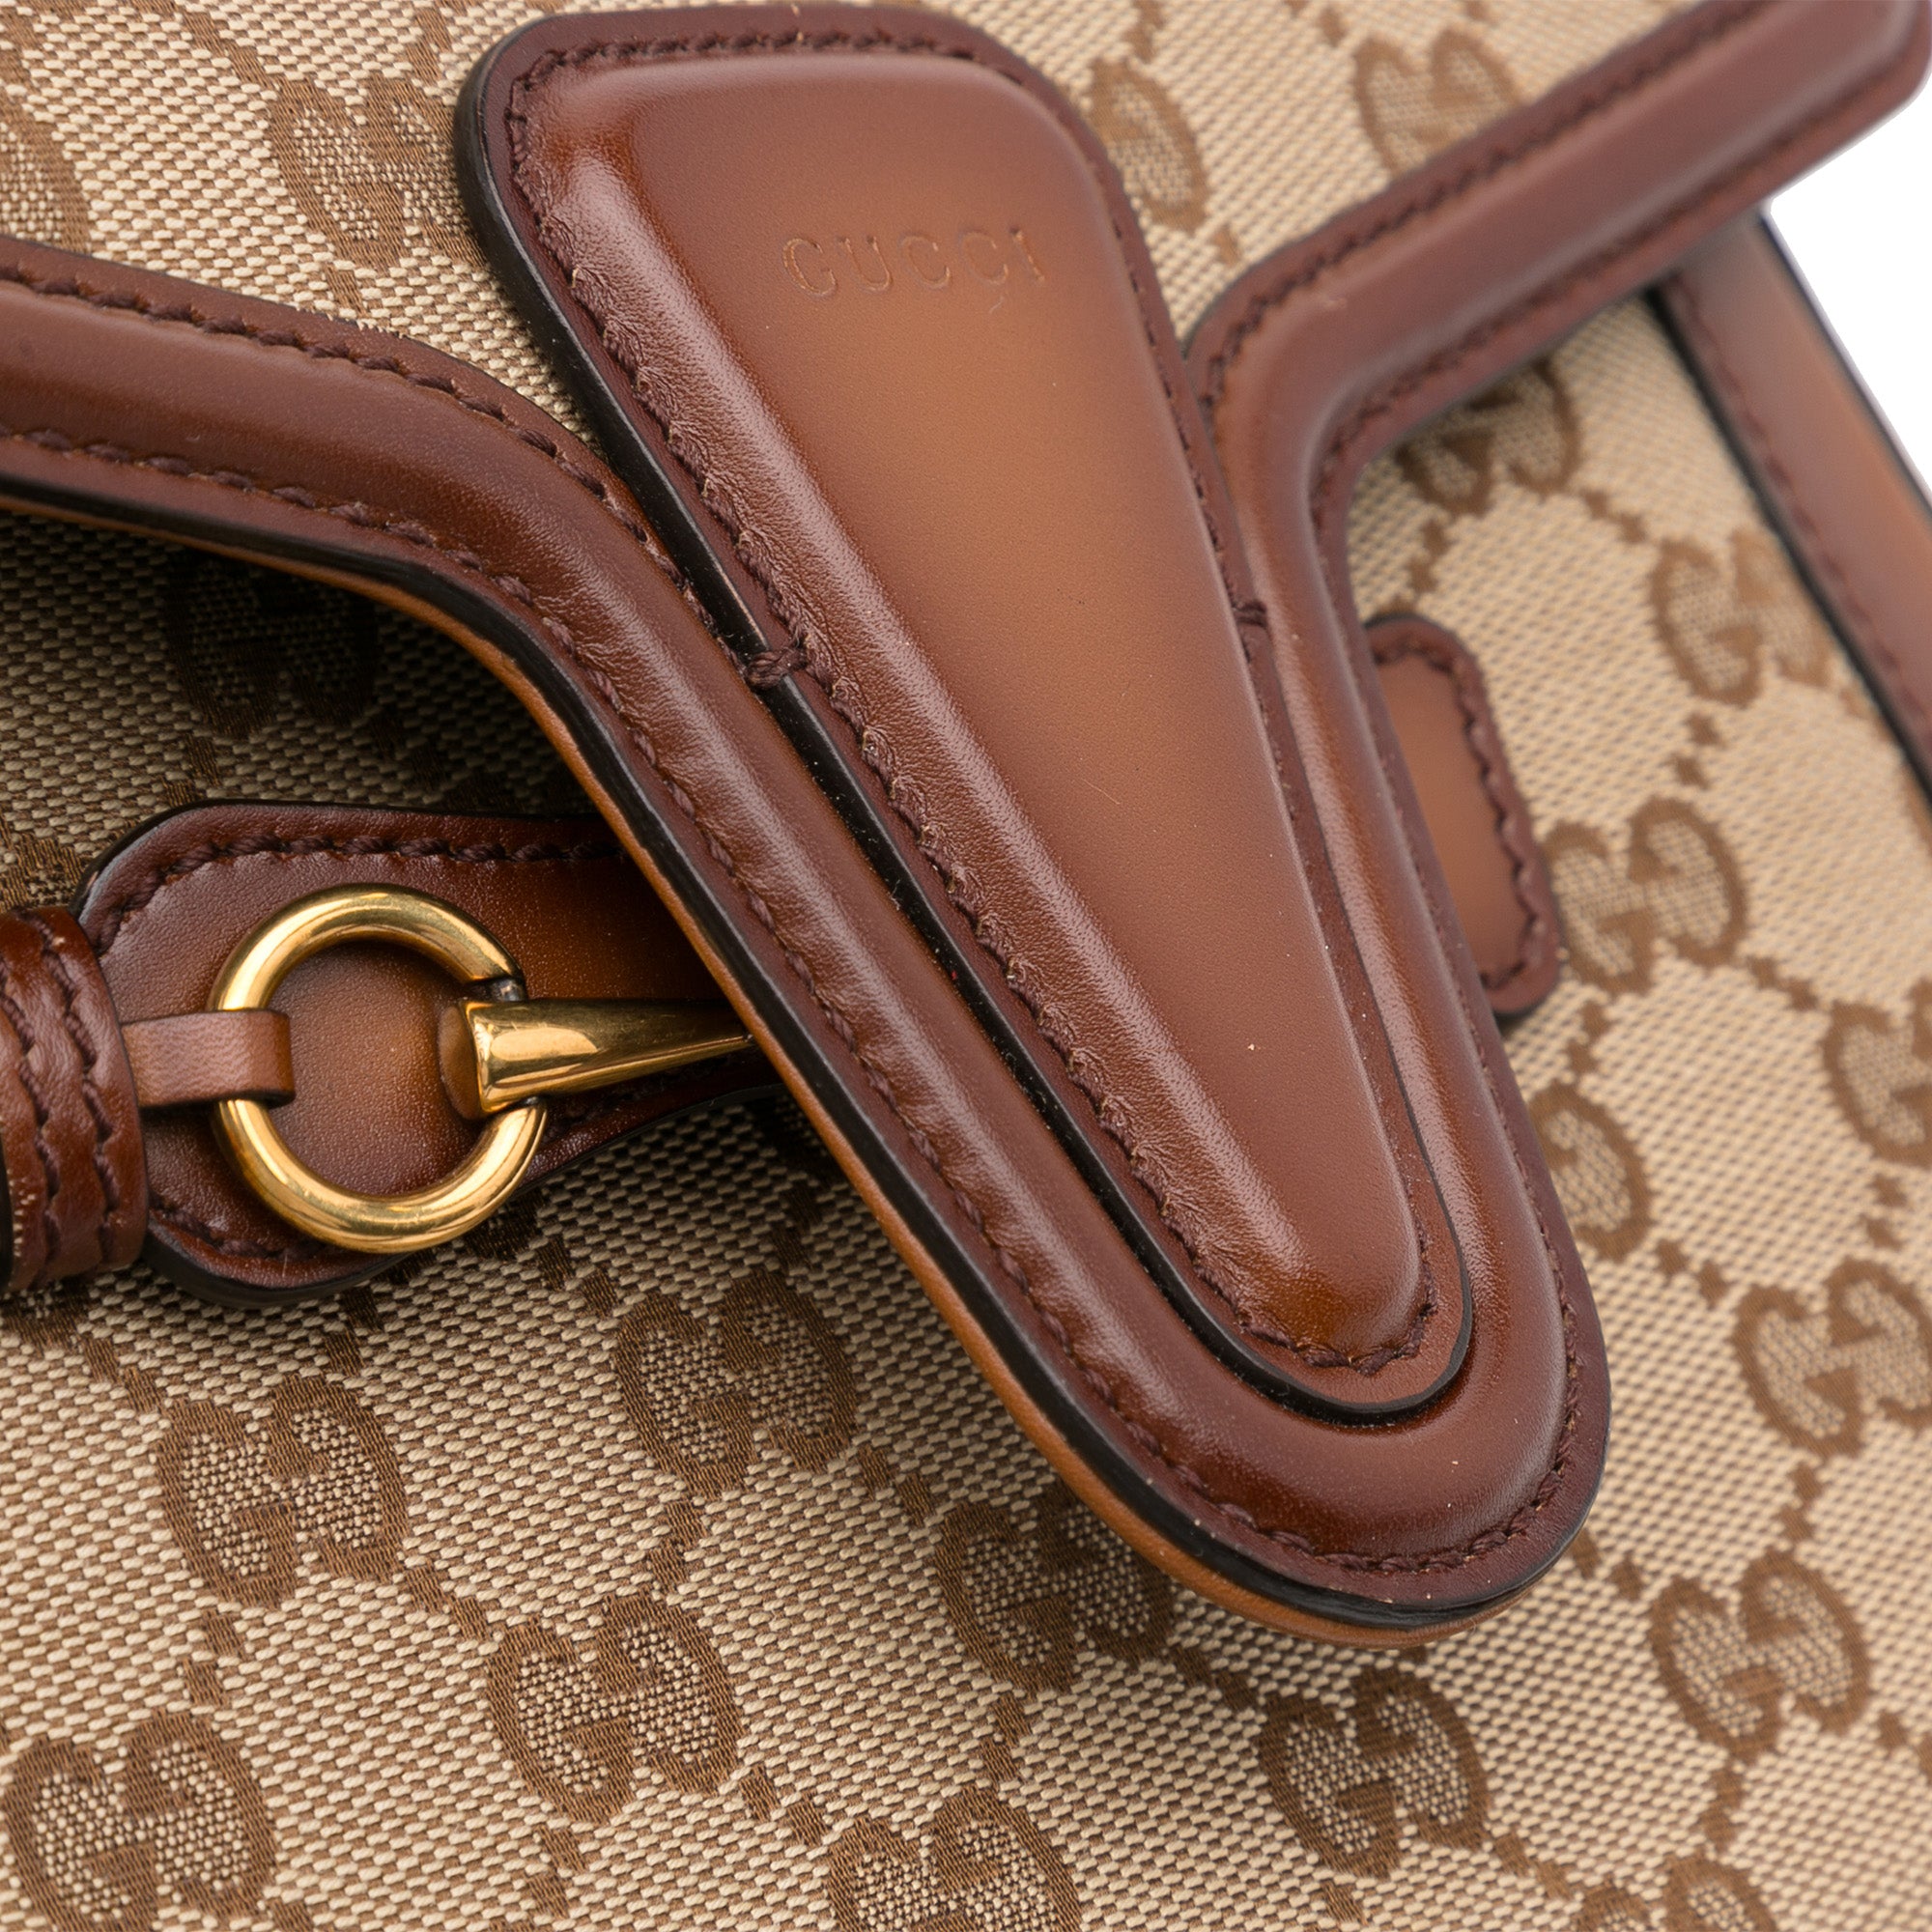 Gucci Lady Web Medium Leather Shoulder Bag in Brown